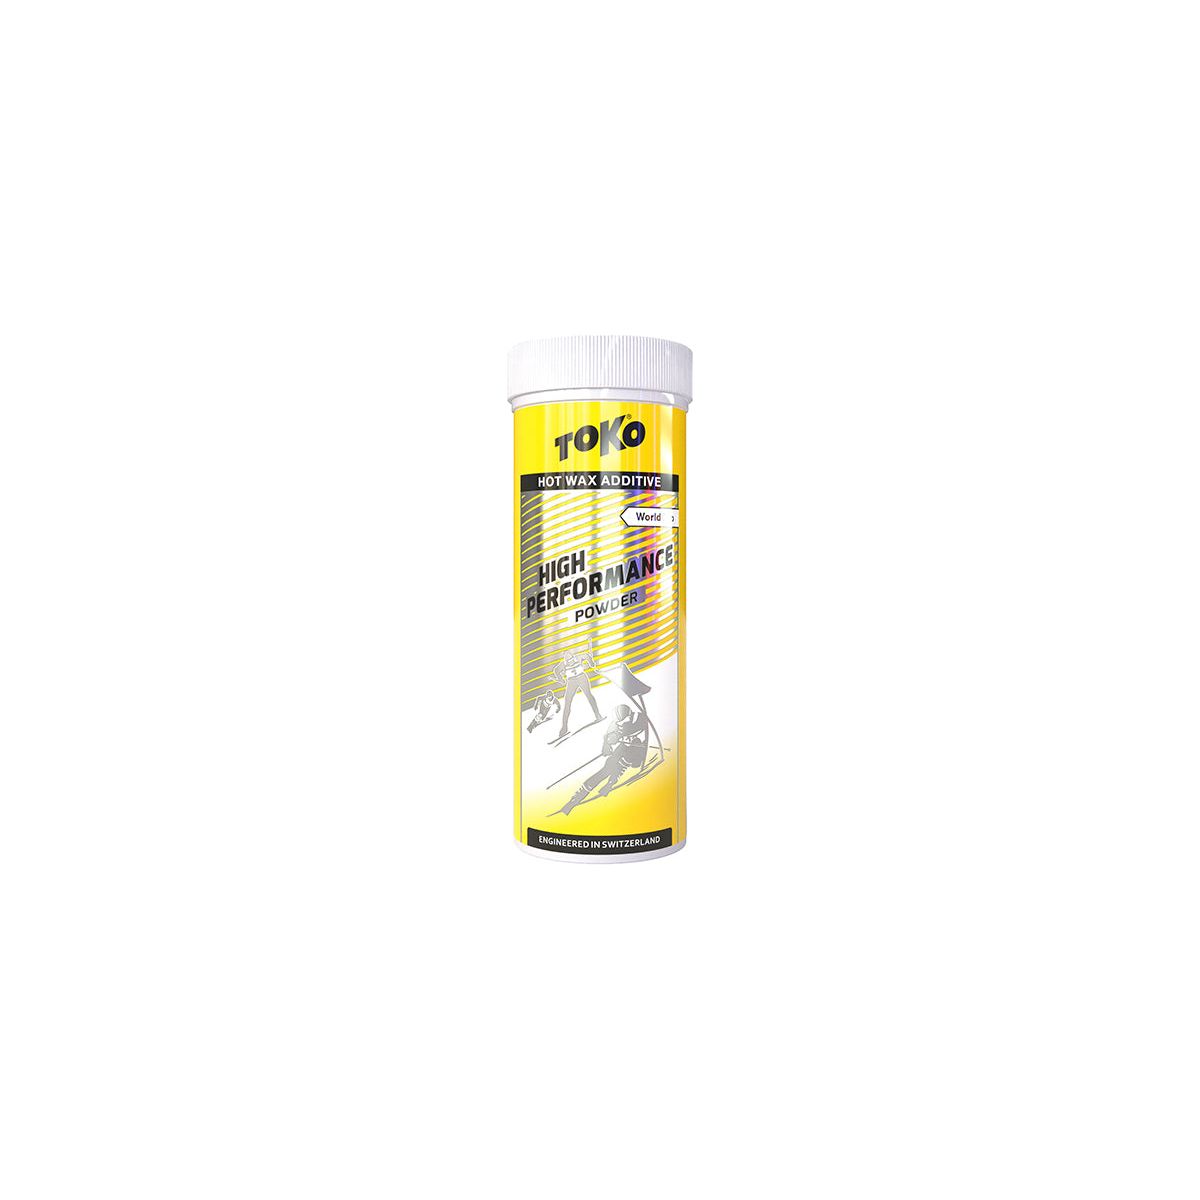 Toko High Performance Powder Yellow 40g